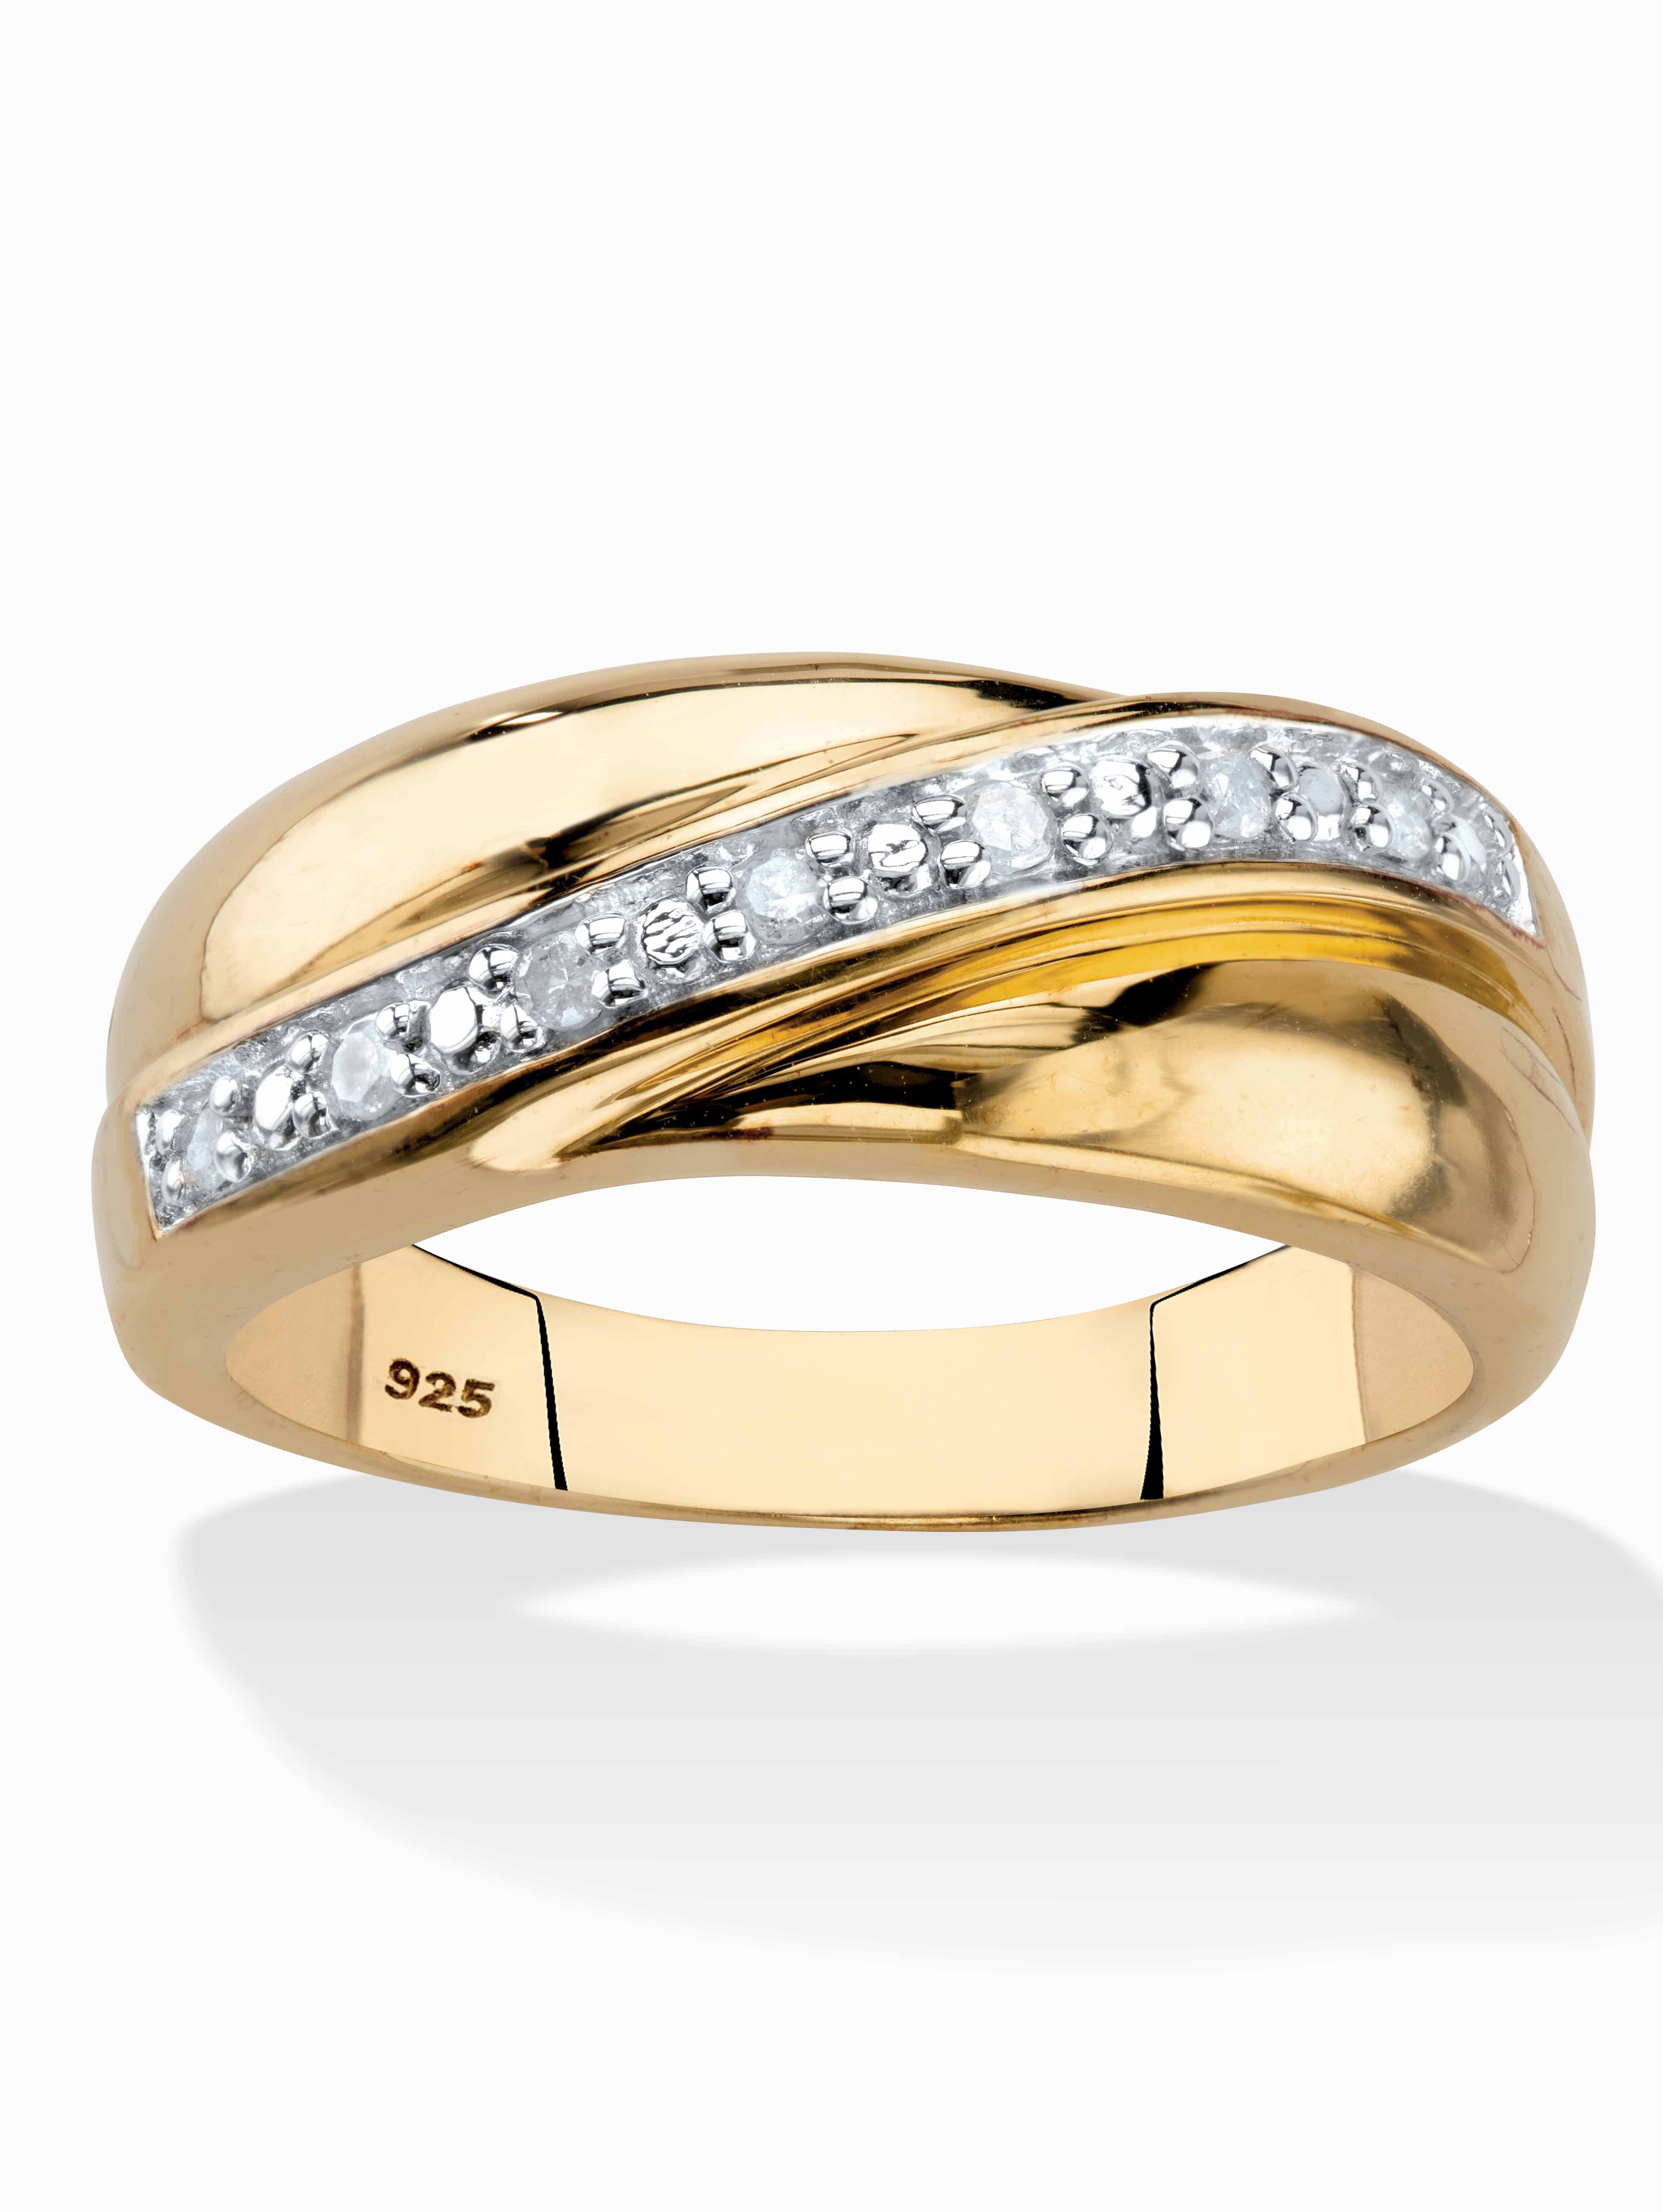 3.4 g Super Jeweler Men Accessories Jewelry Rings 18K 5MM Milgrain Ladies & Mens Wedding Band 